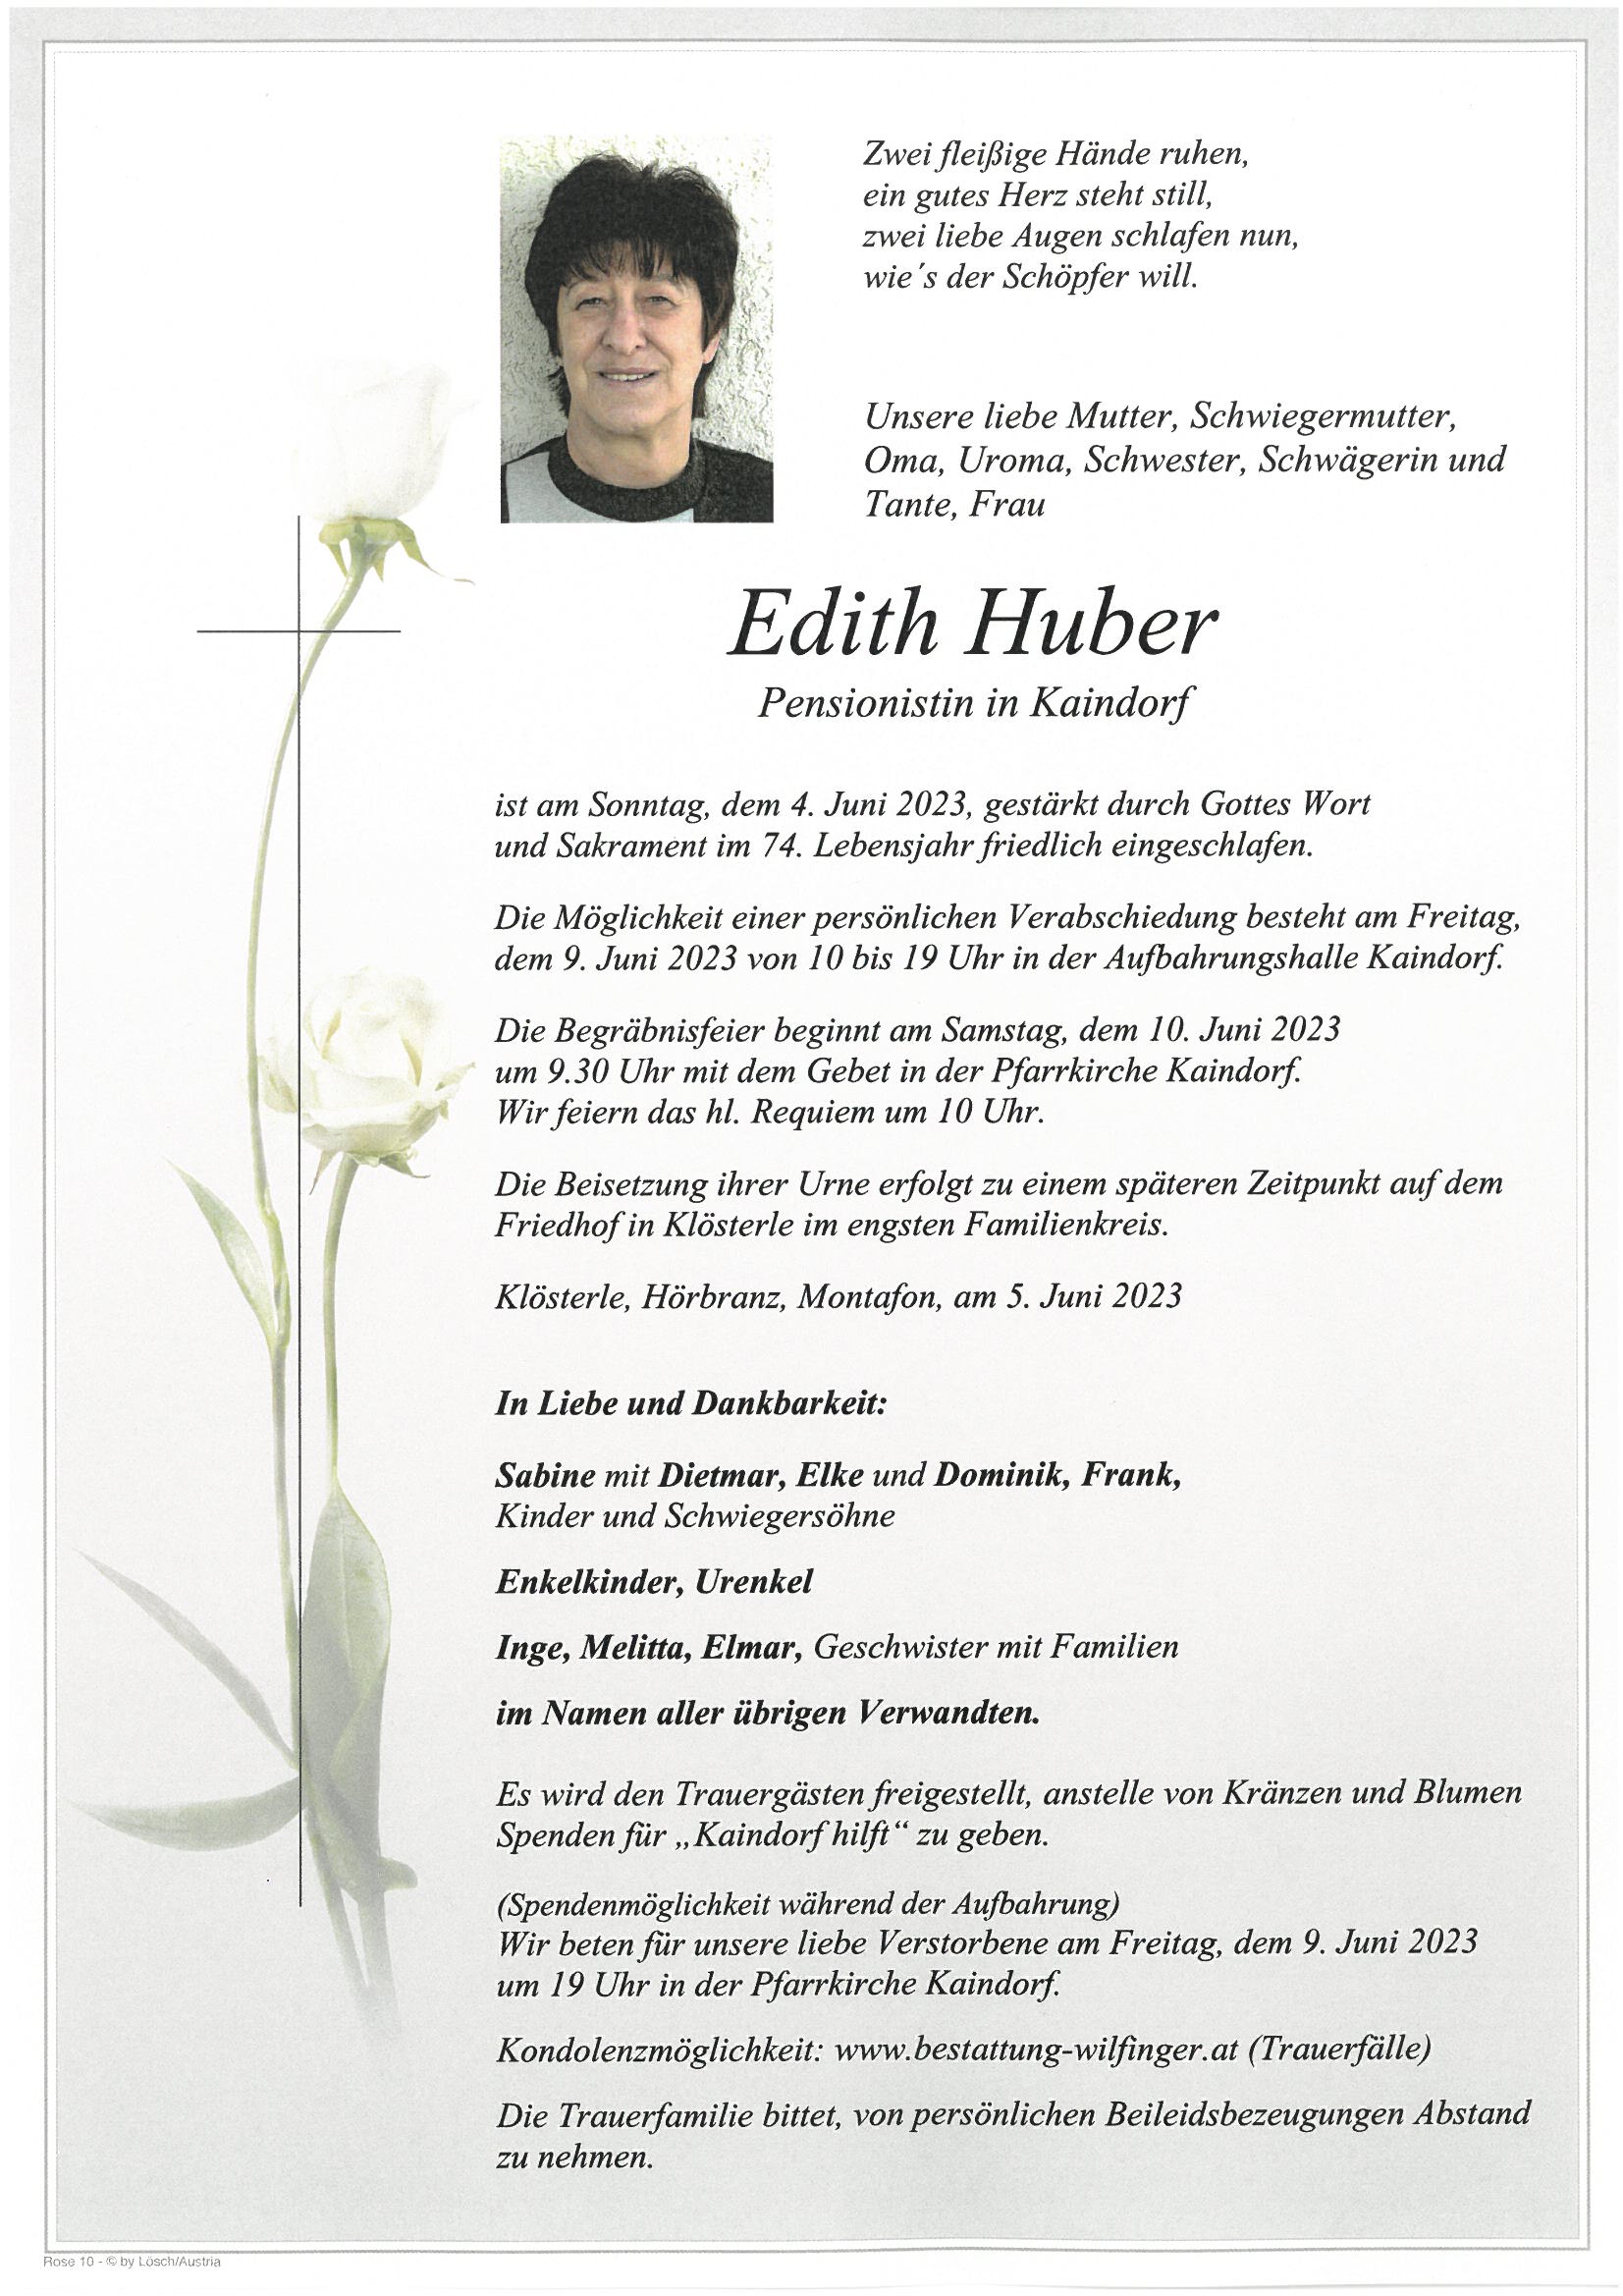 Edith Huber, Kaindorf